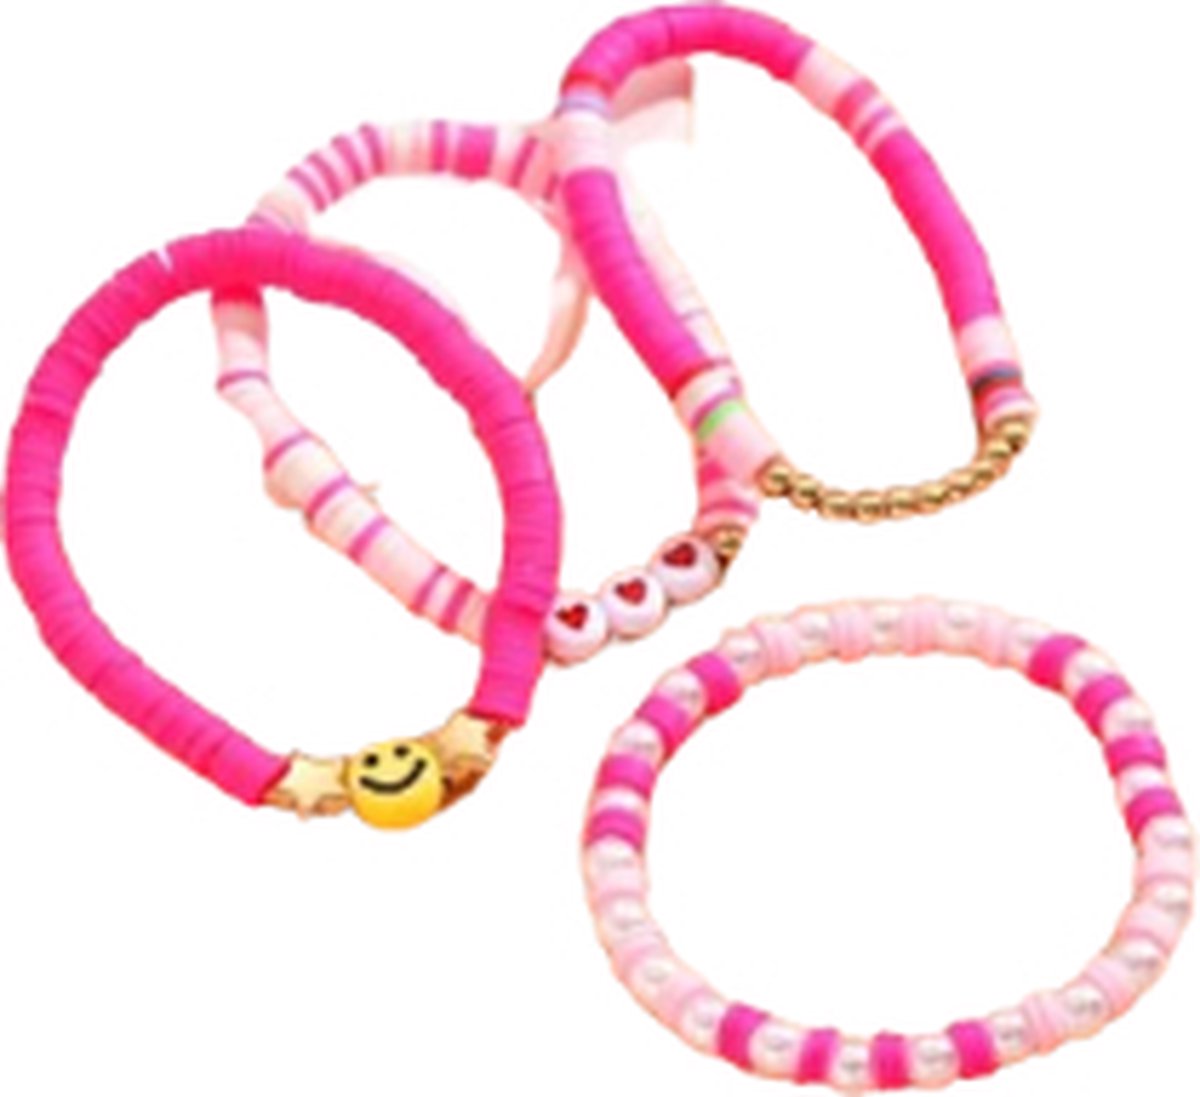 Smiley armbanden set -armbandenset roze - 4 armbanden smiley roze/wit - vrolijke armbandenset